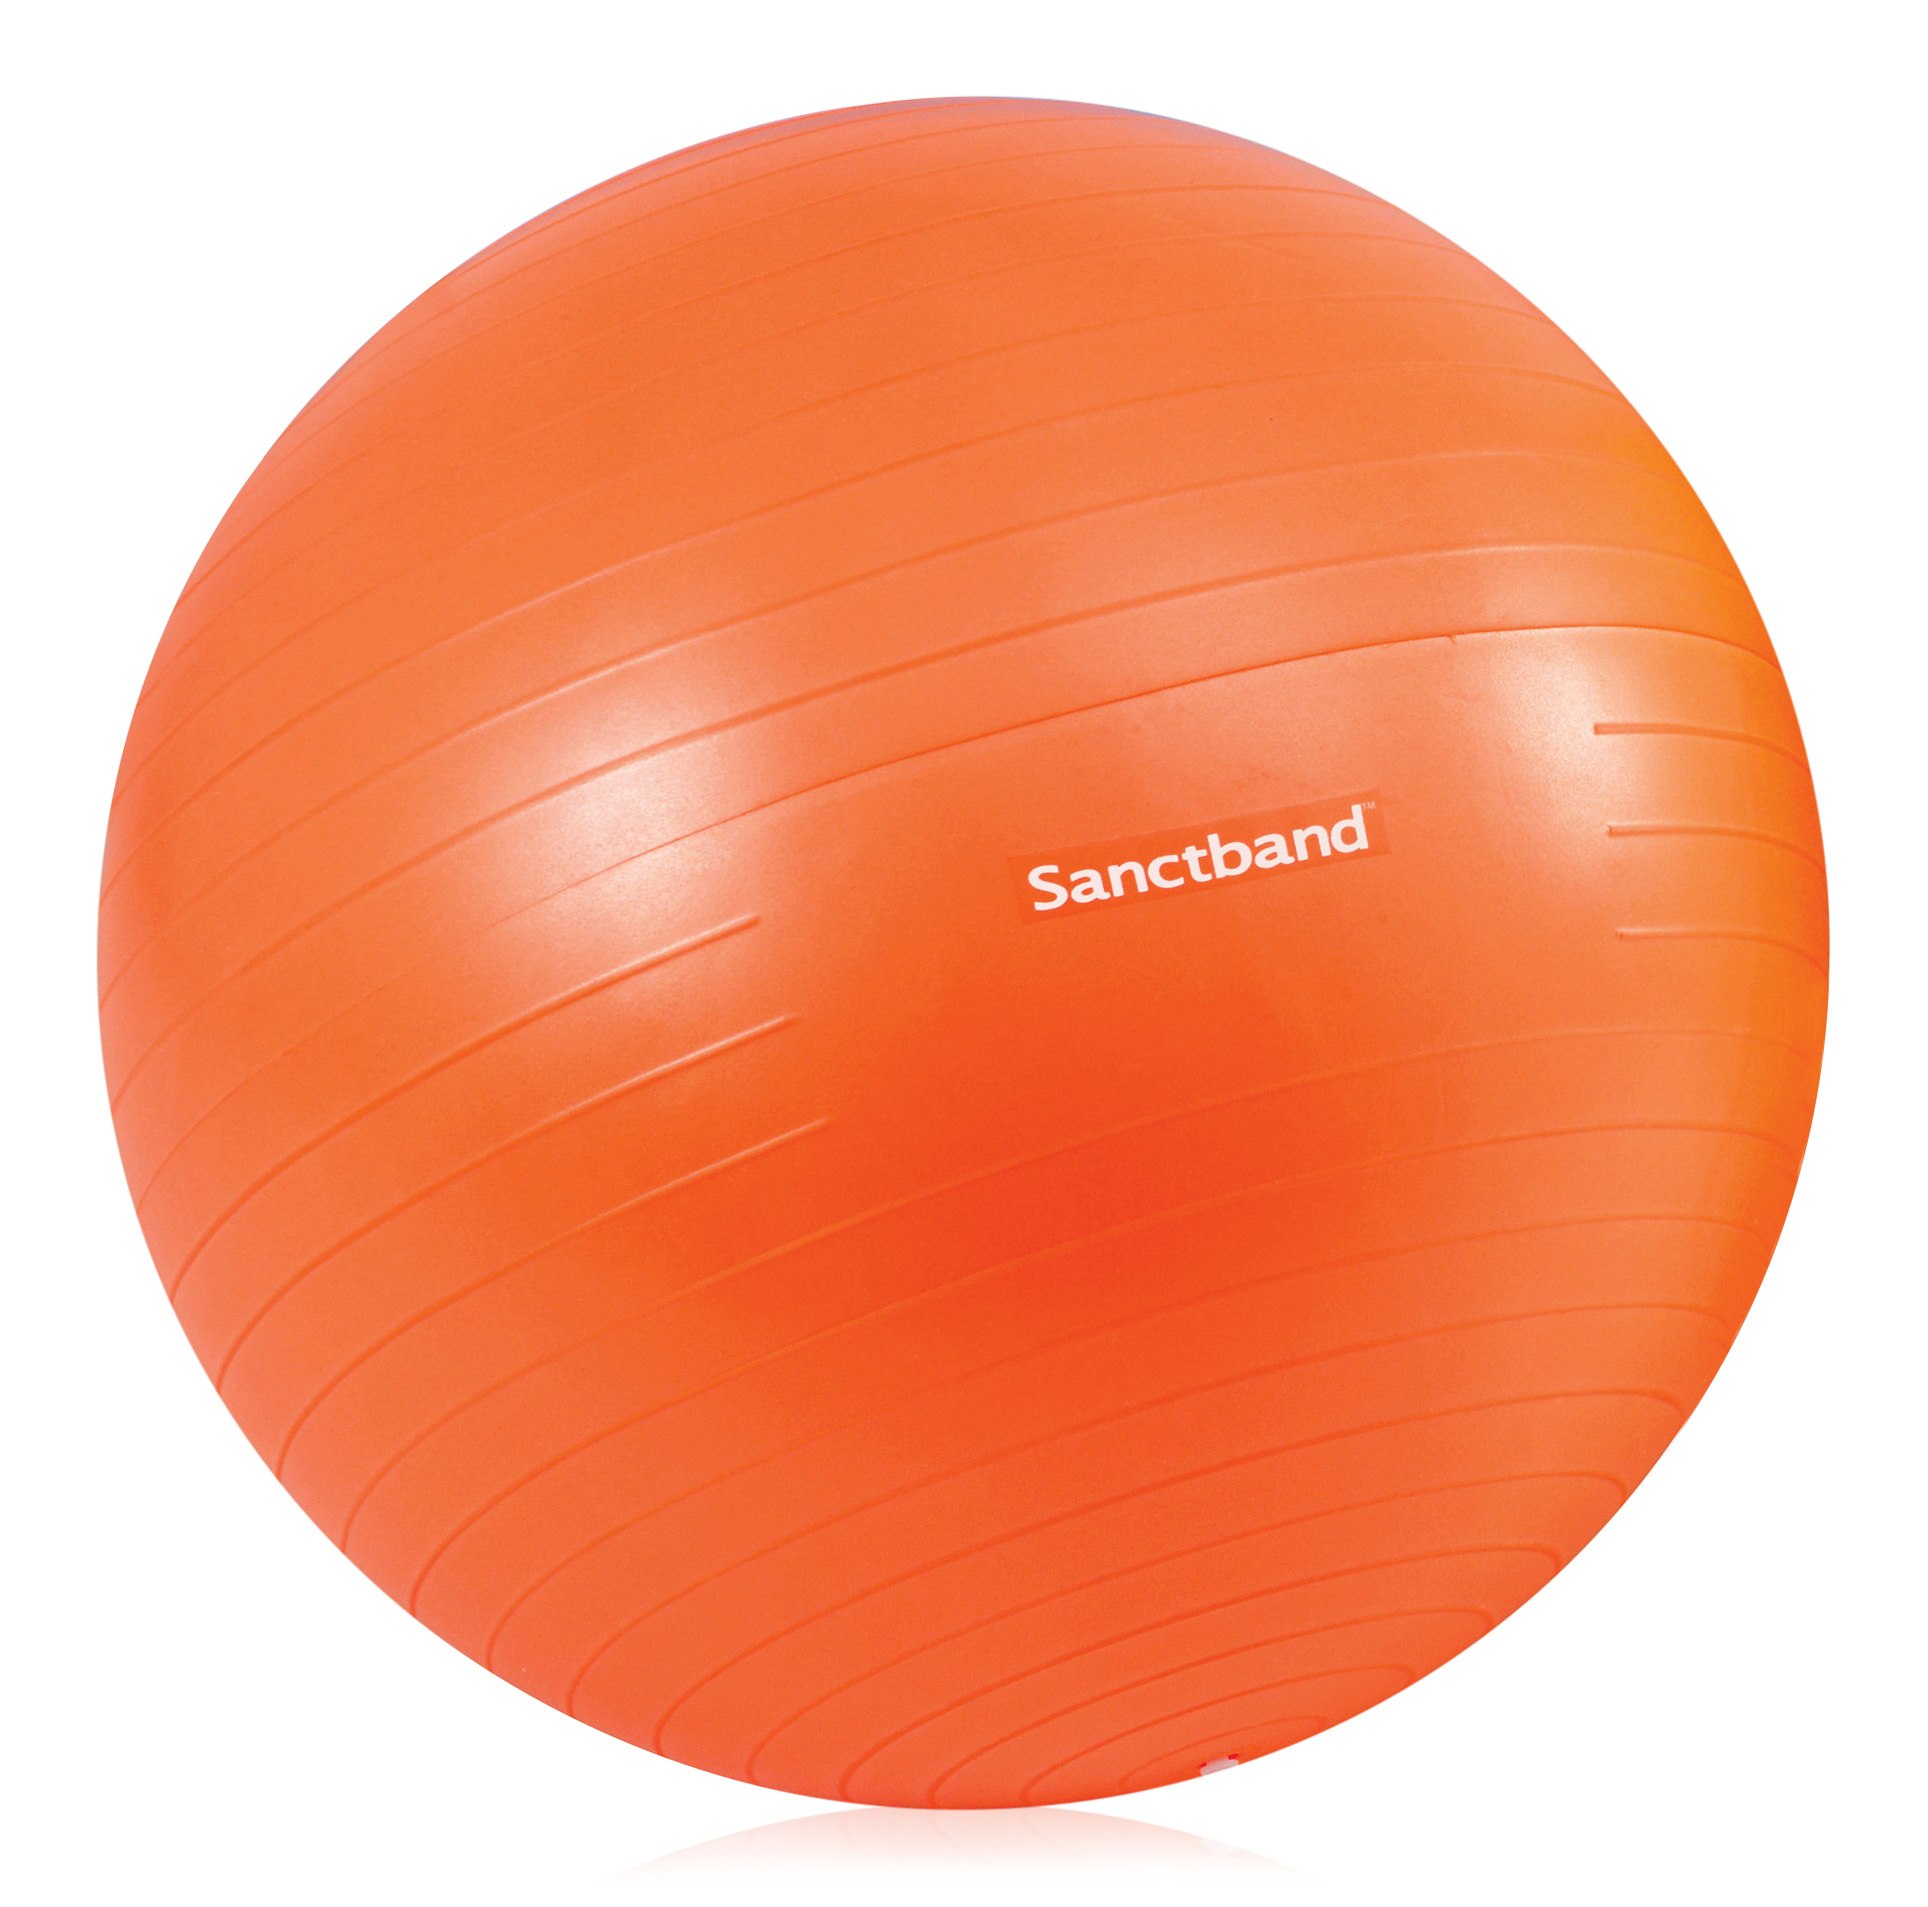 Sanctband Anti Burst Gymnastikball Orange 55cm Durchmesser